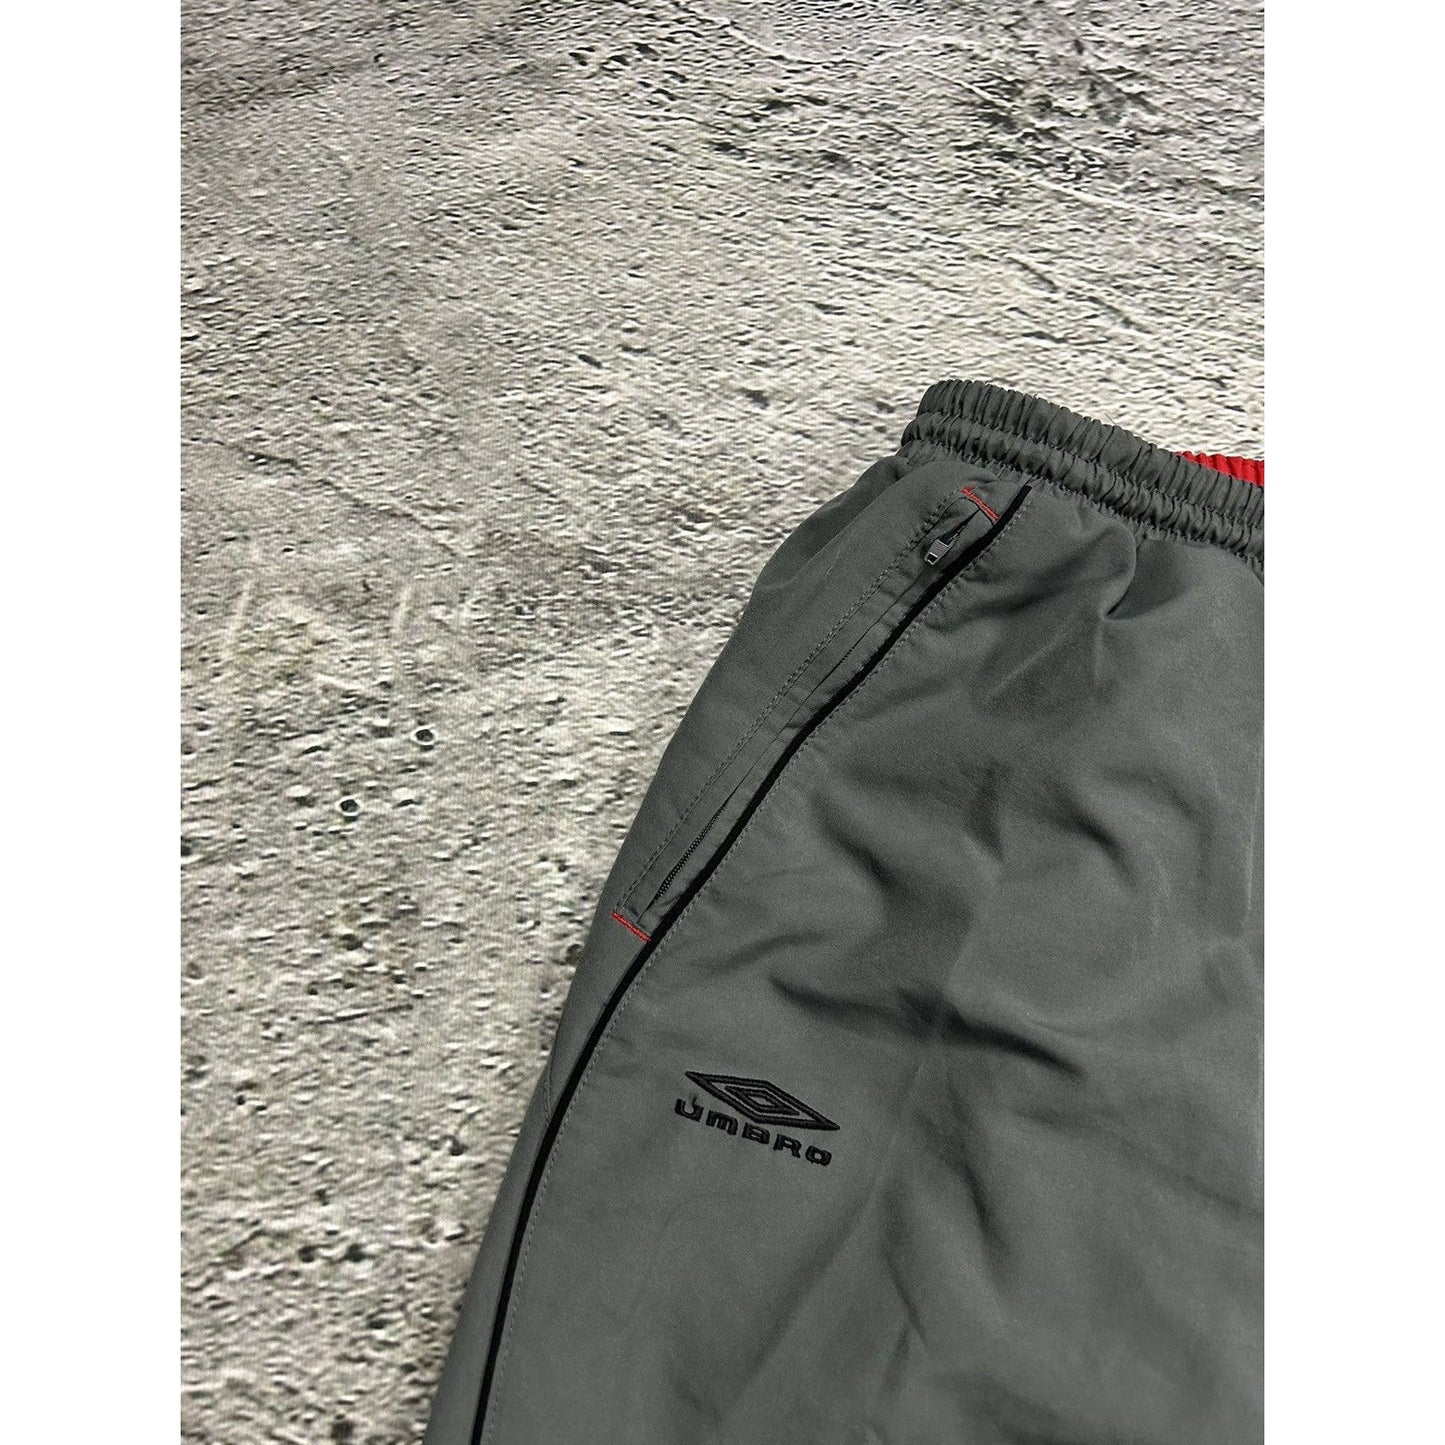 Umbro nylon track pants vintage grey red black Man UTD